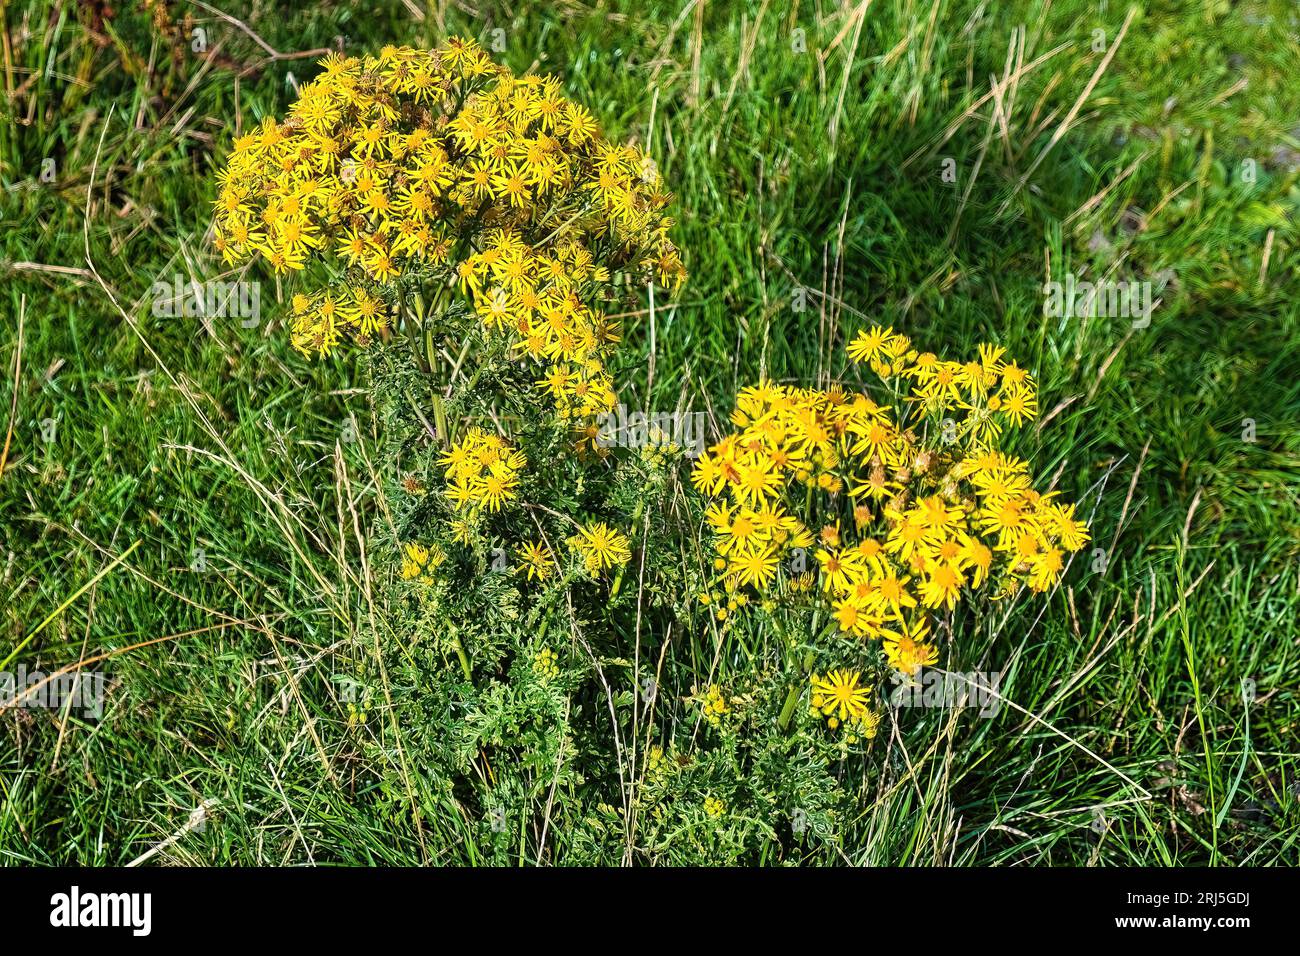 Tansy ragwort (Jacobaea vulgaris, syn. Senecio jacobaea) with yellow flowers in a meadow Stock Photo